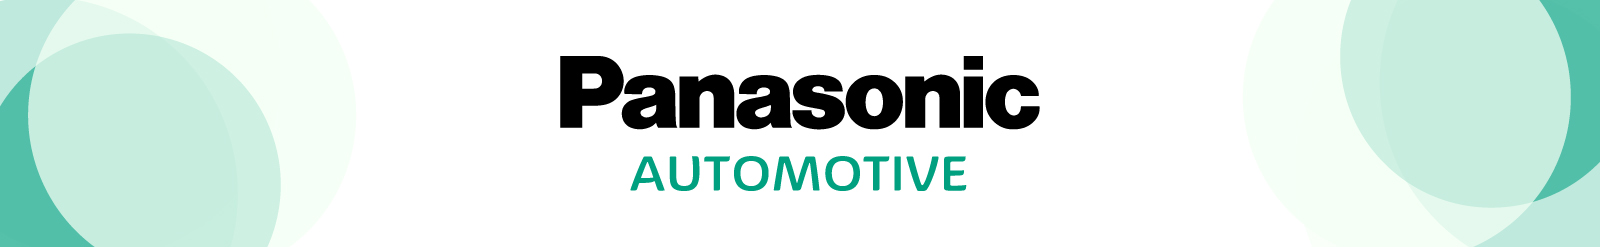 Panasonic AUTOMOTIVE ロゴ